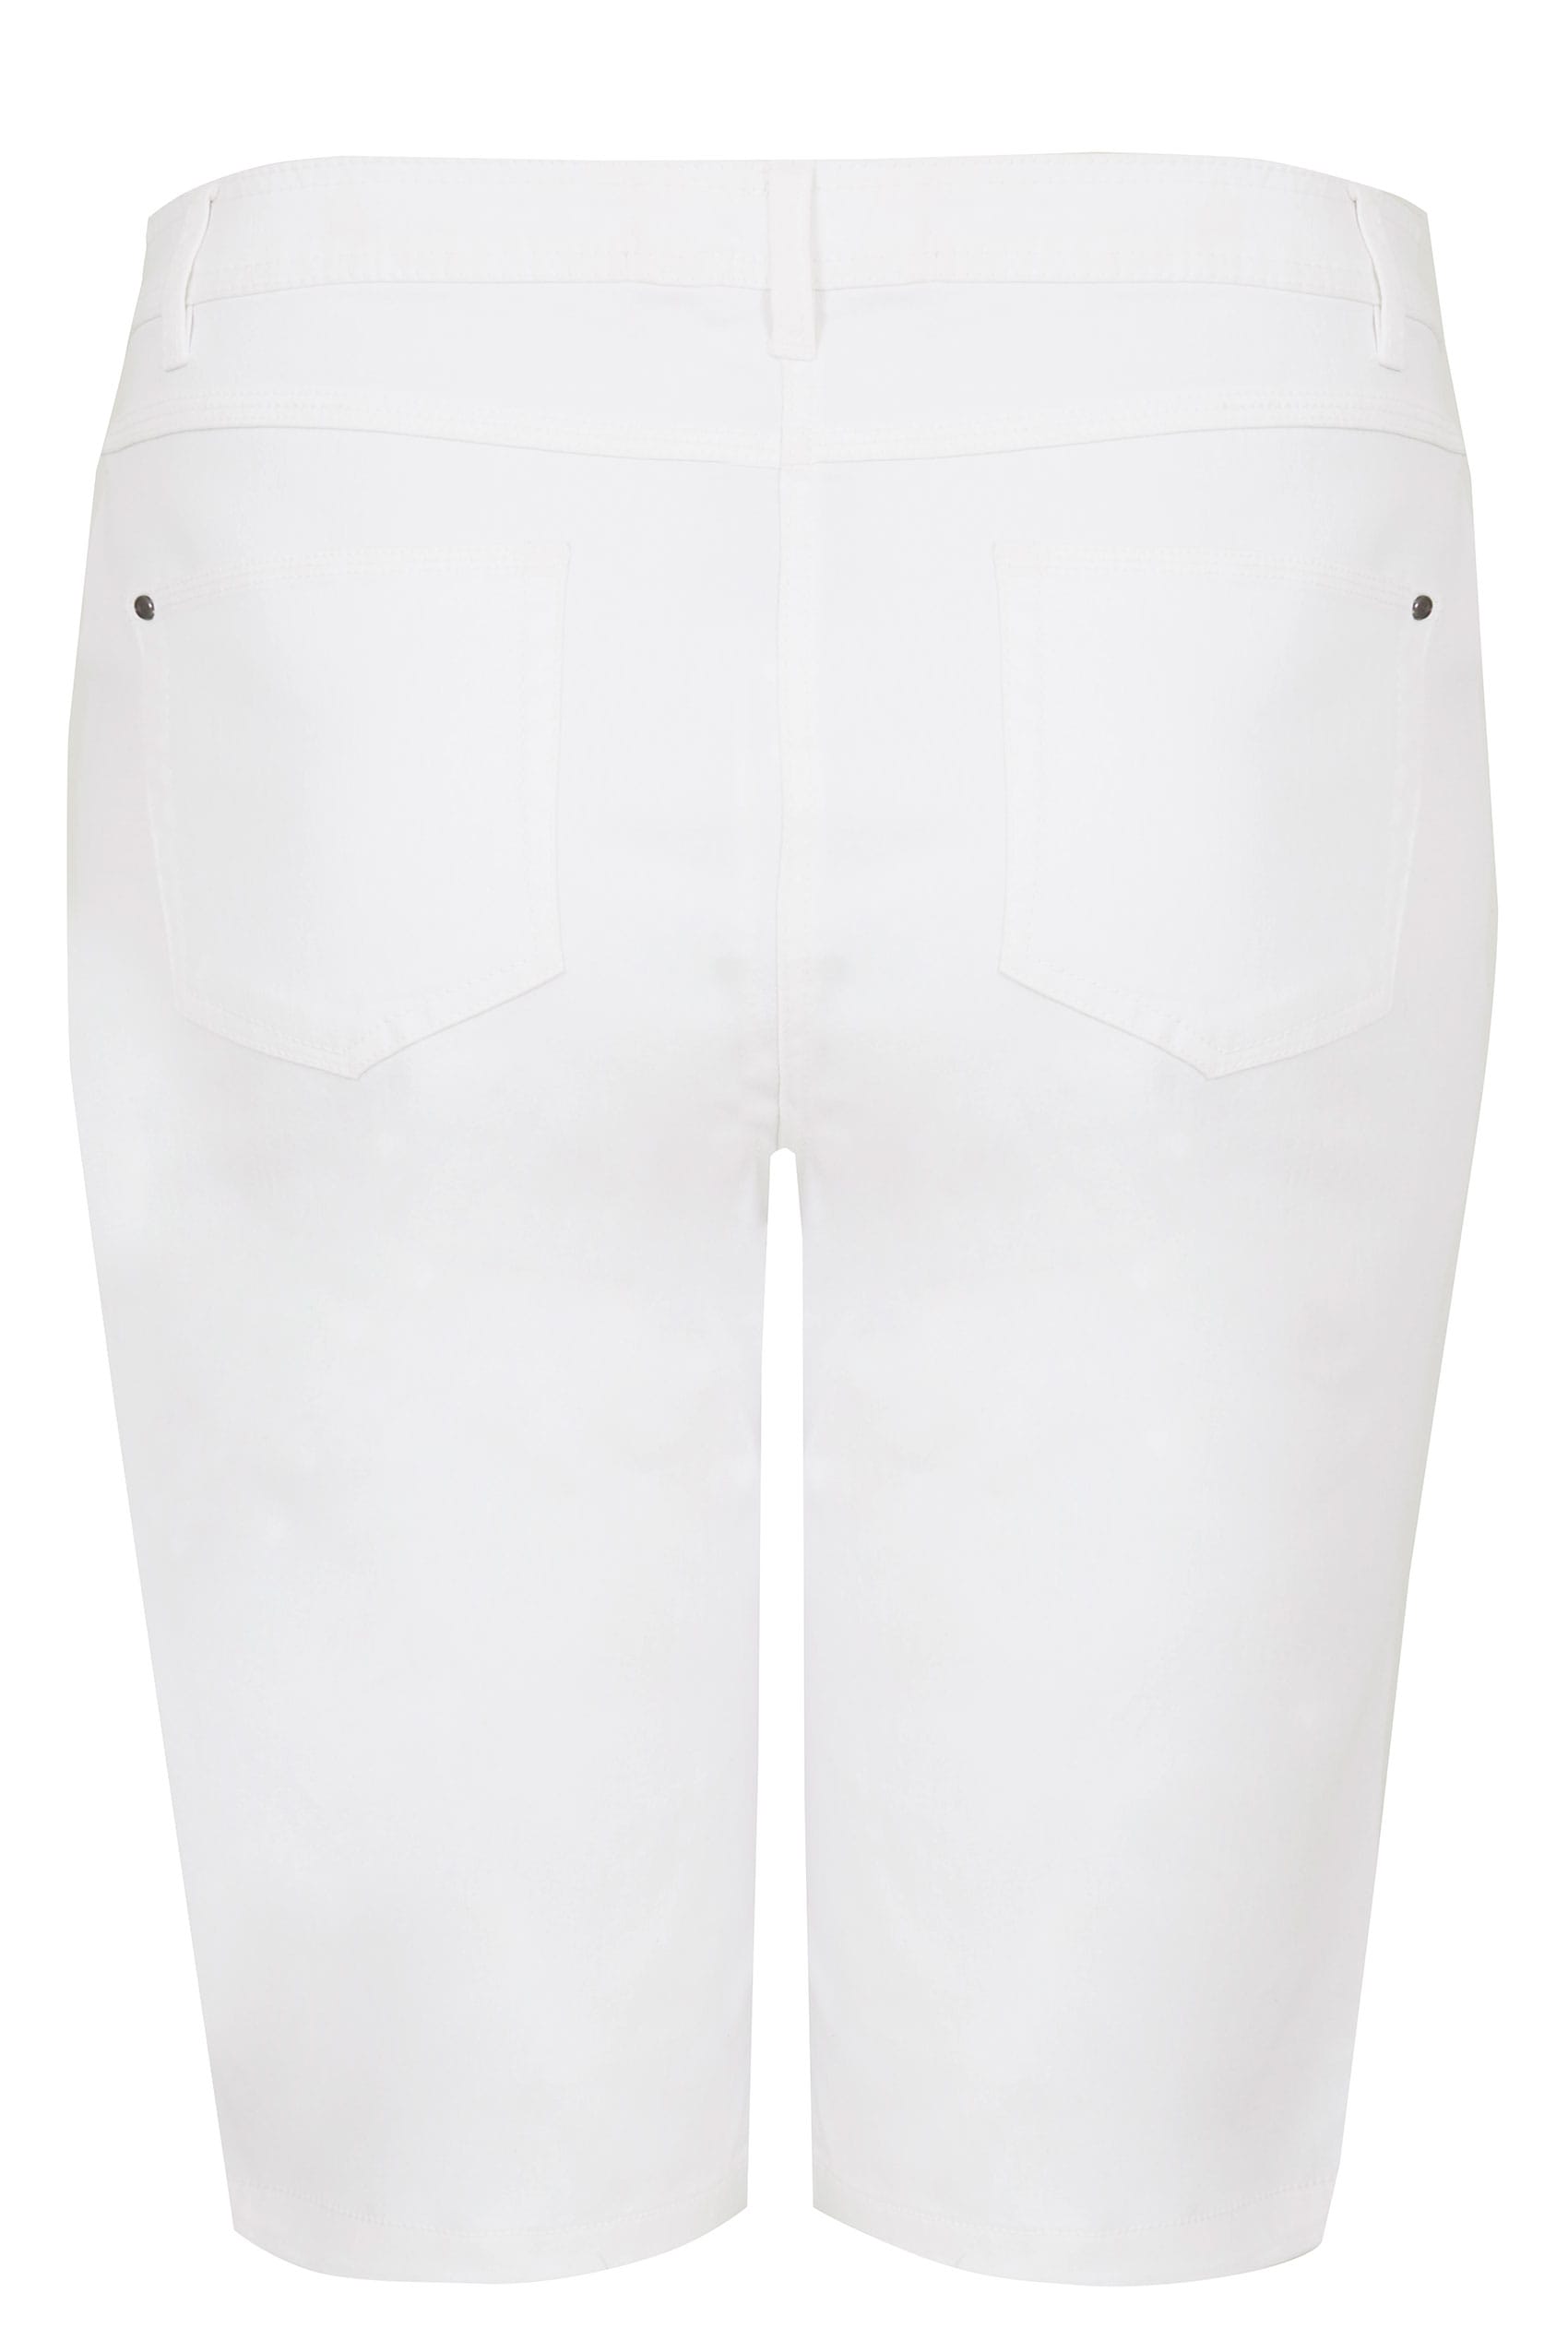 White Knee Length Shorts, Plus size 16 to 36